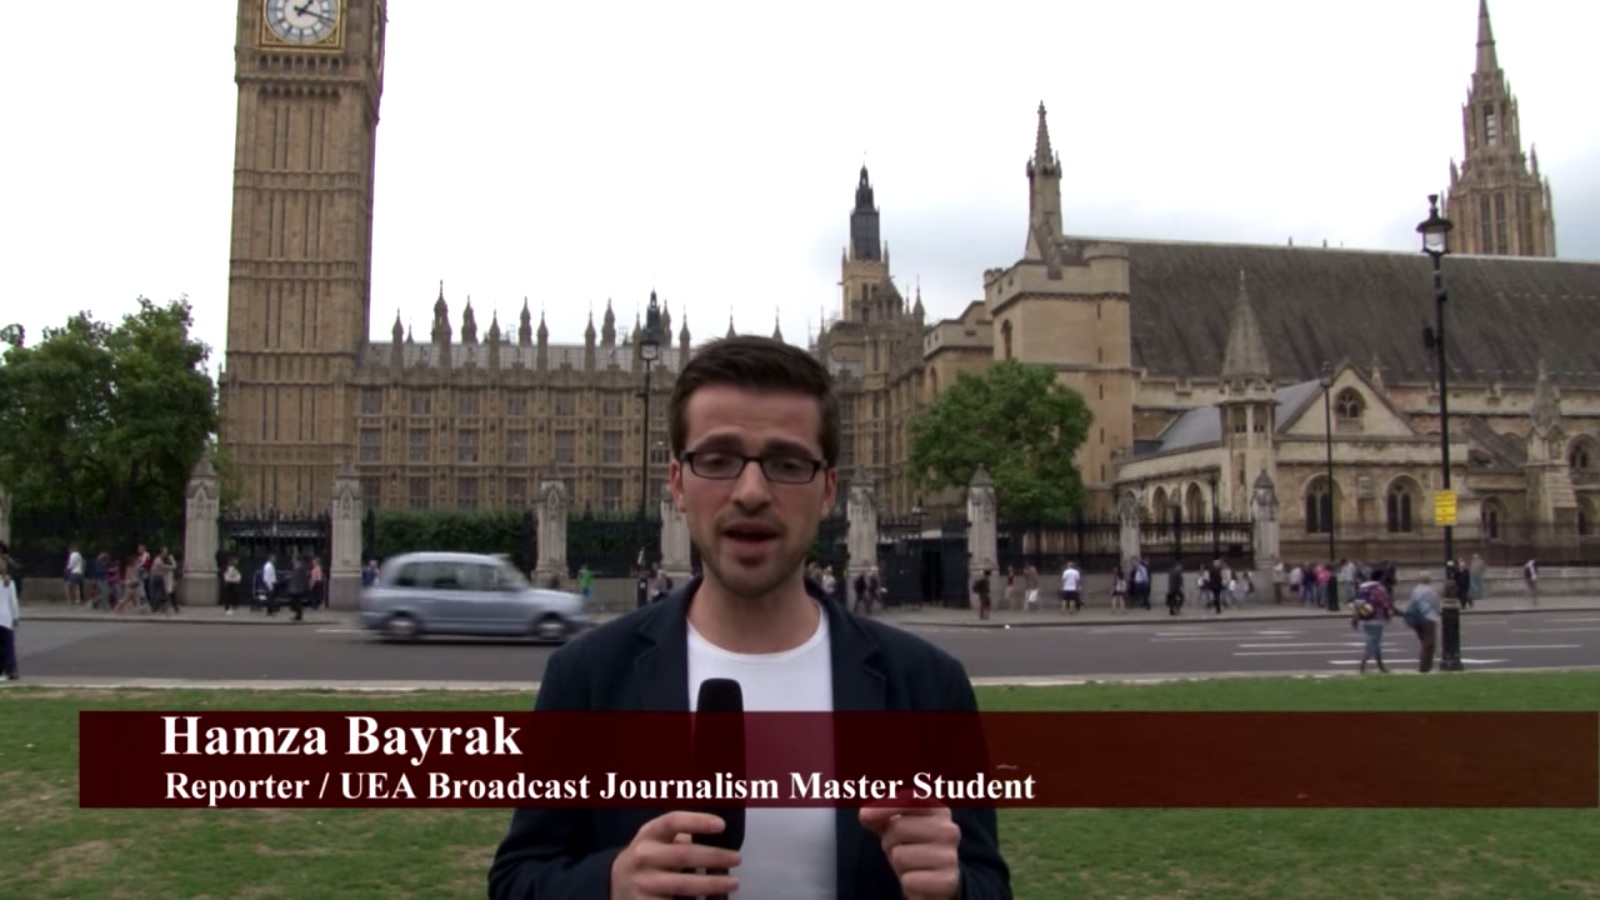 UEA Broadcast Journalism student